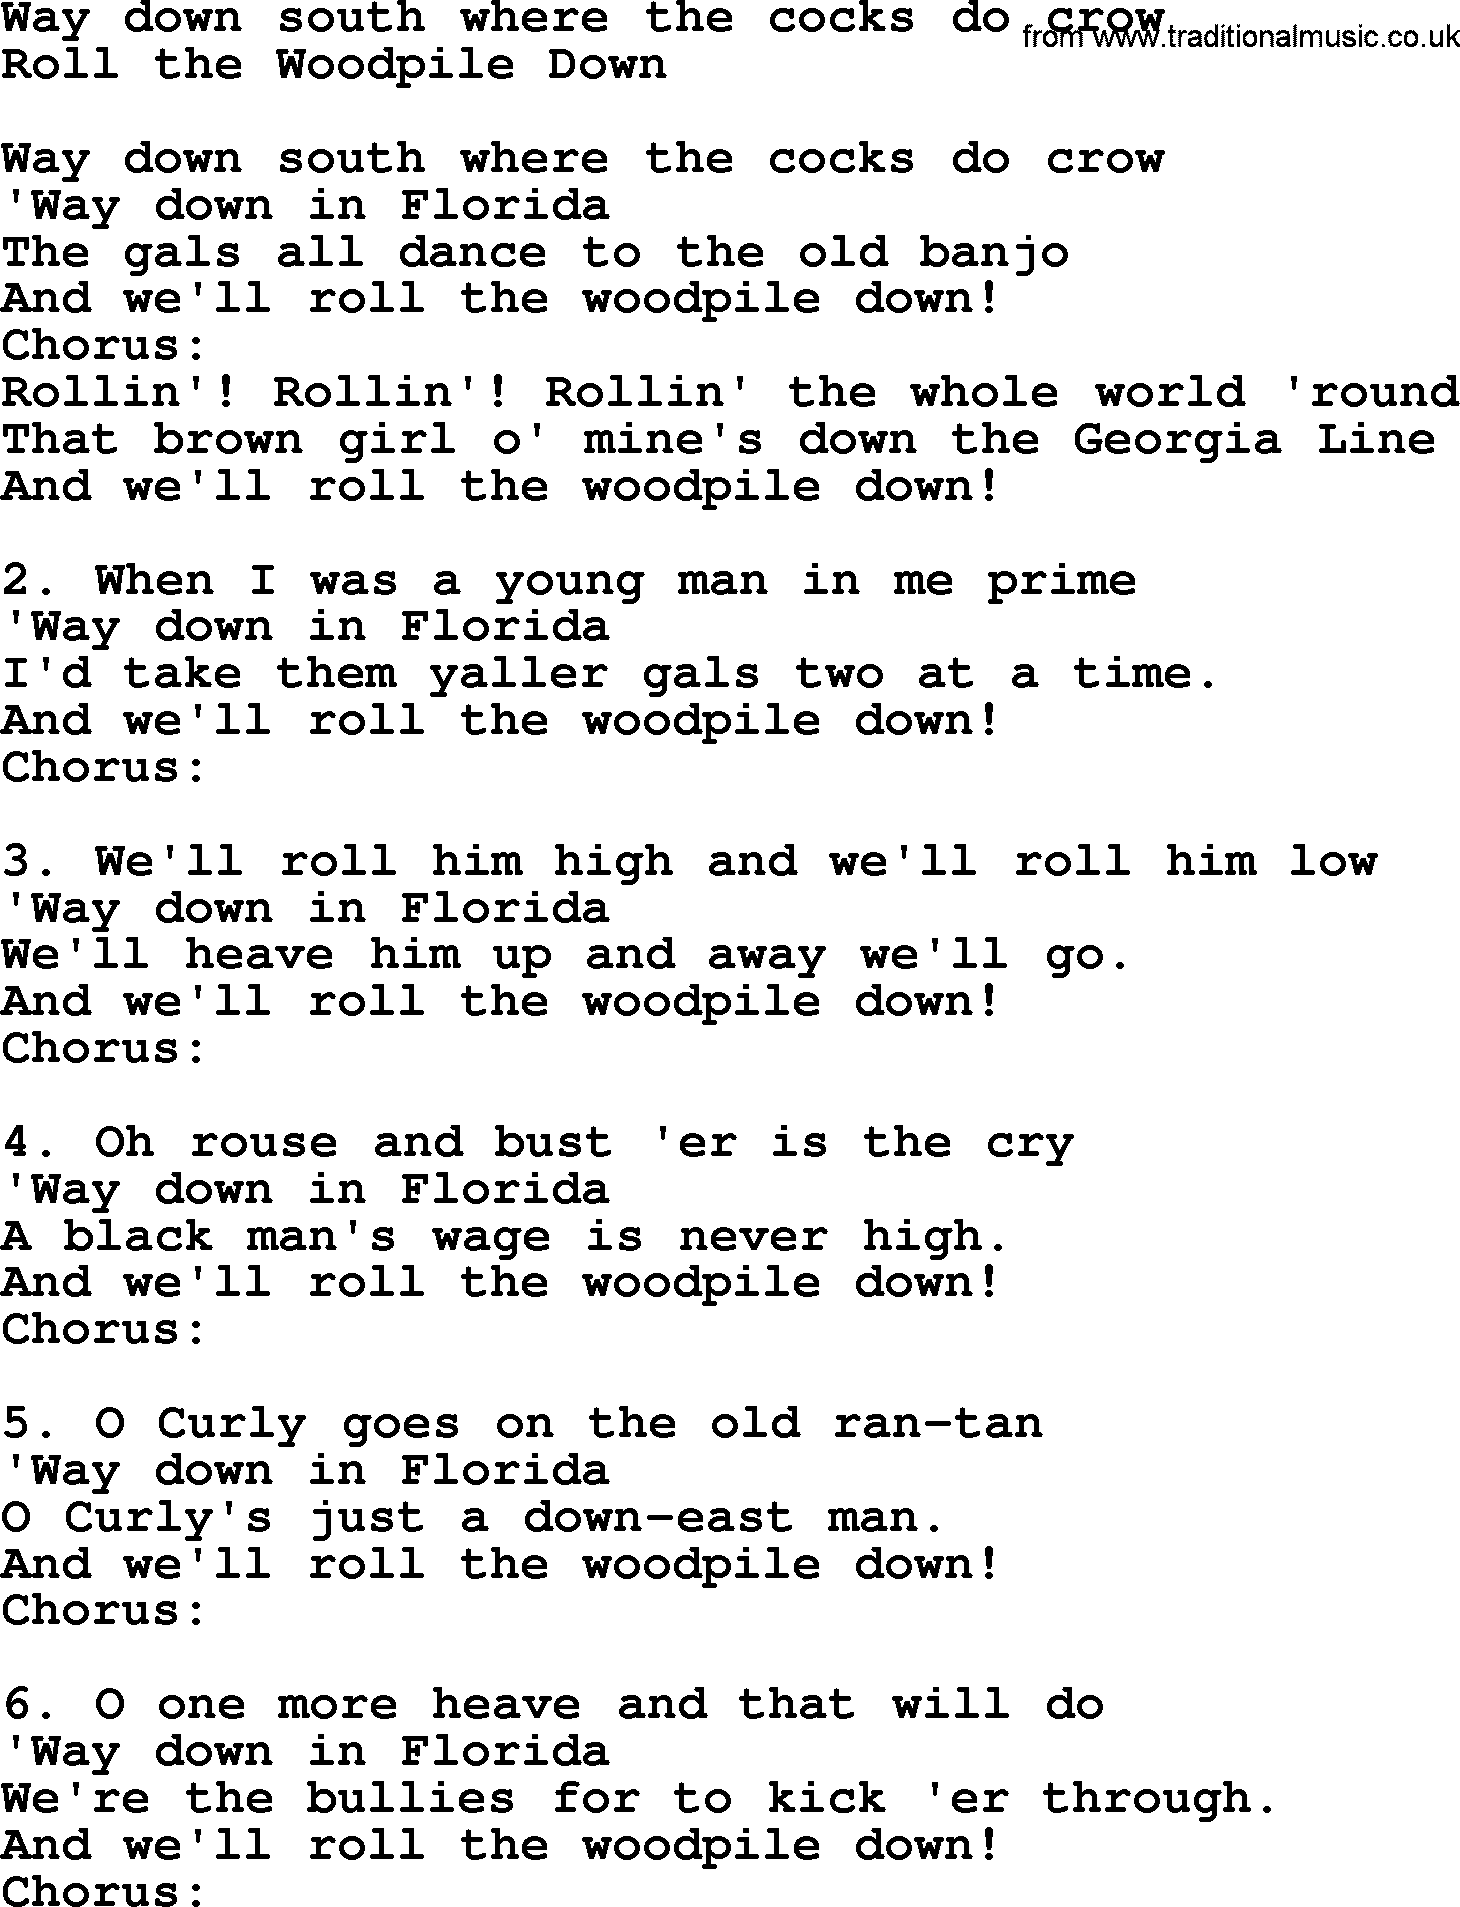 Sea Song or Shantie: Way Down South Where The Cocks Do Crow, lyrics